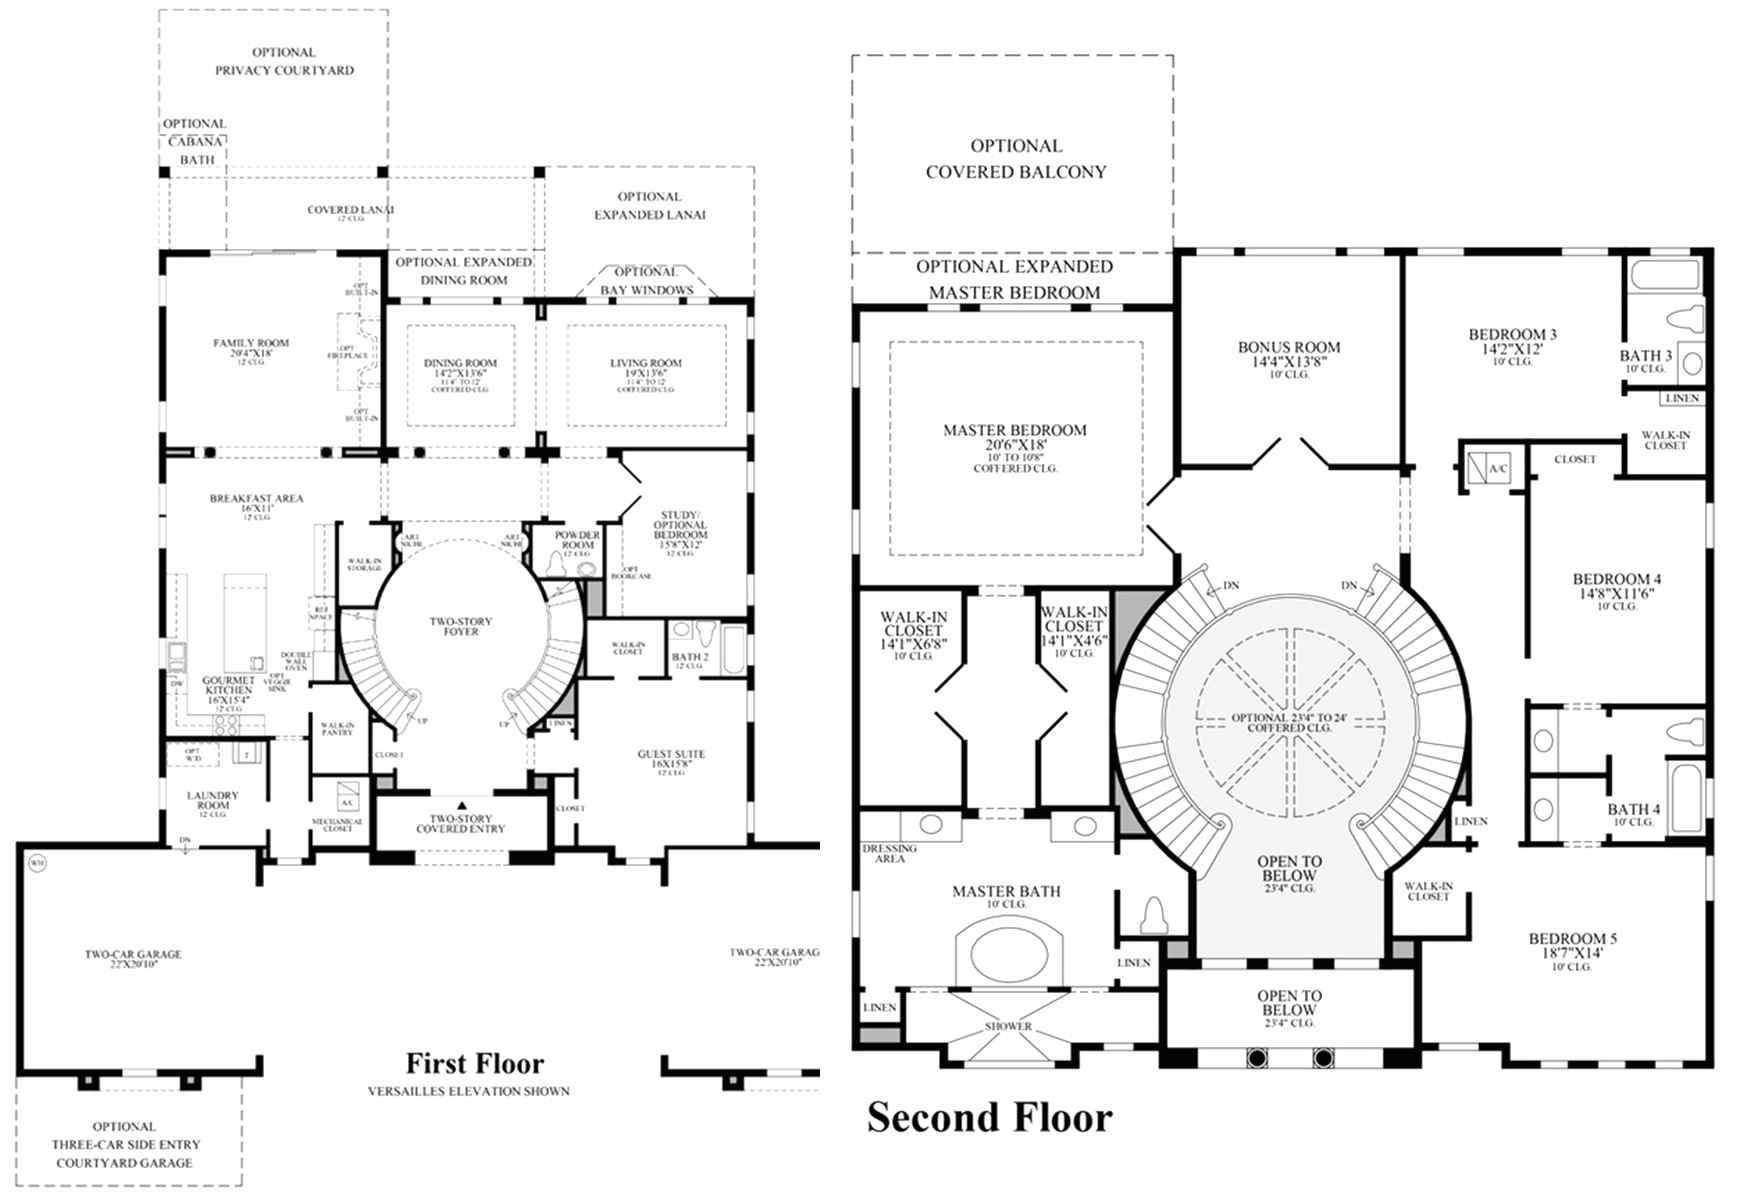 southfork ranch house plans as well as roman villa floor plan inspirational unique roman villa floor plan